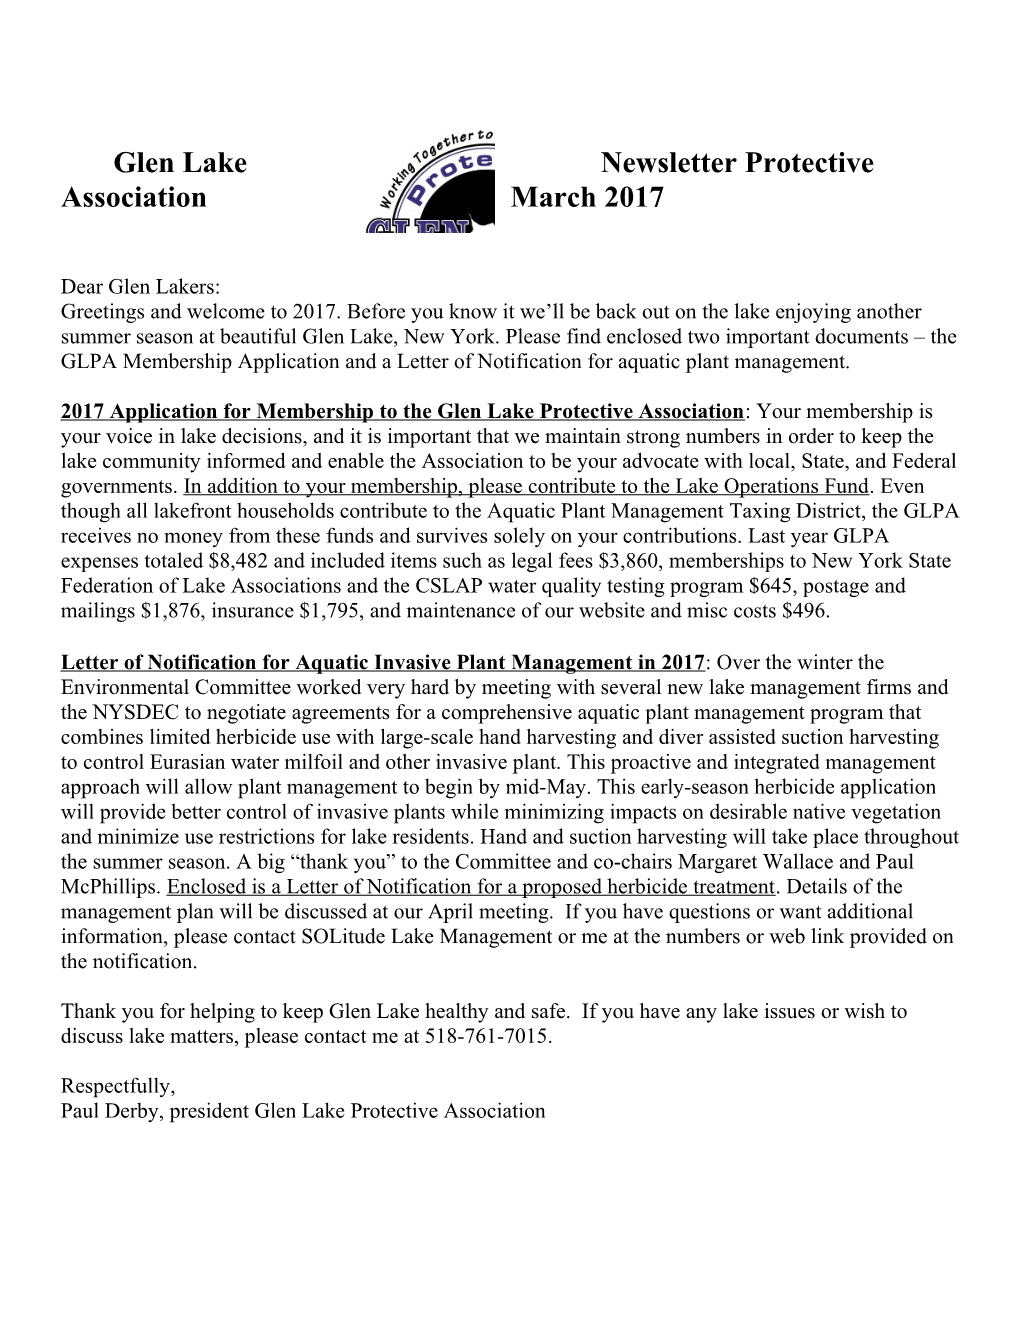 Glen Lake Newsletter Protective Association March 2017